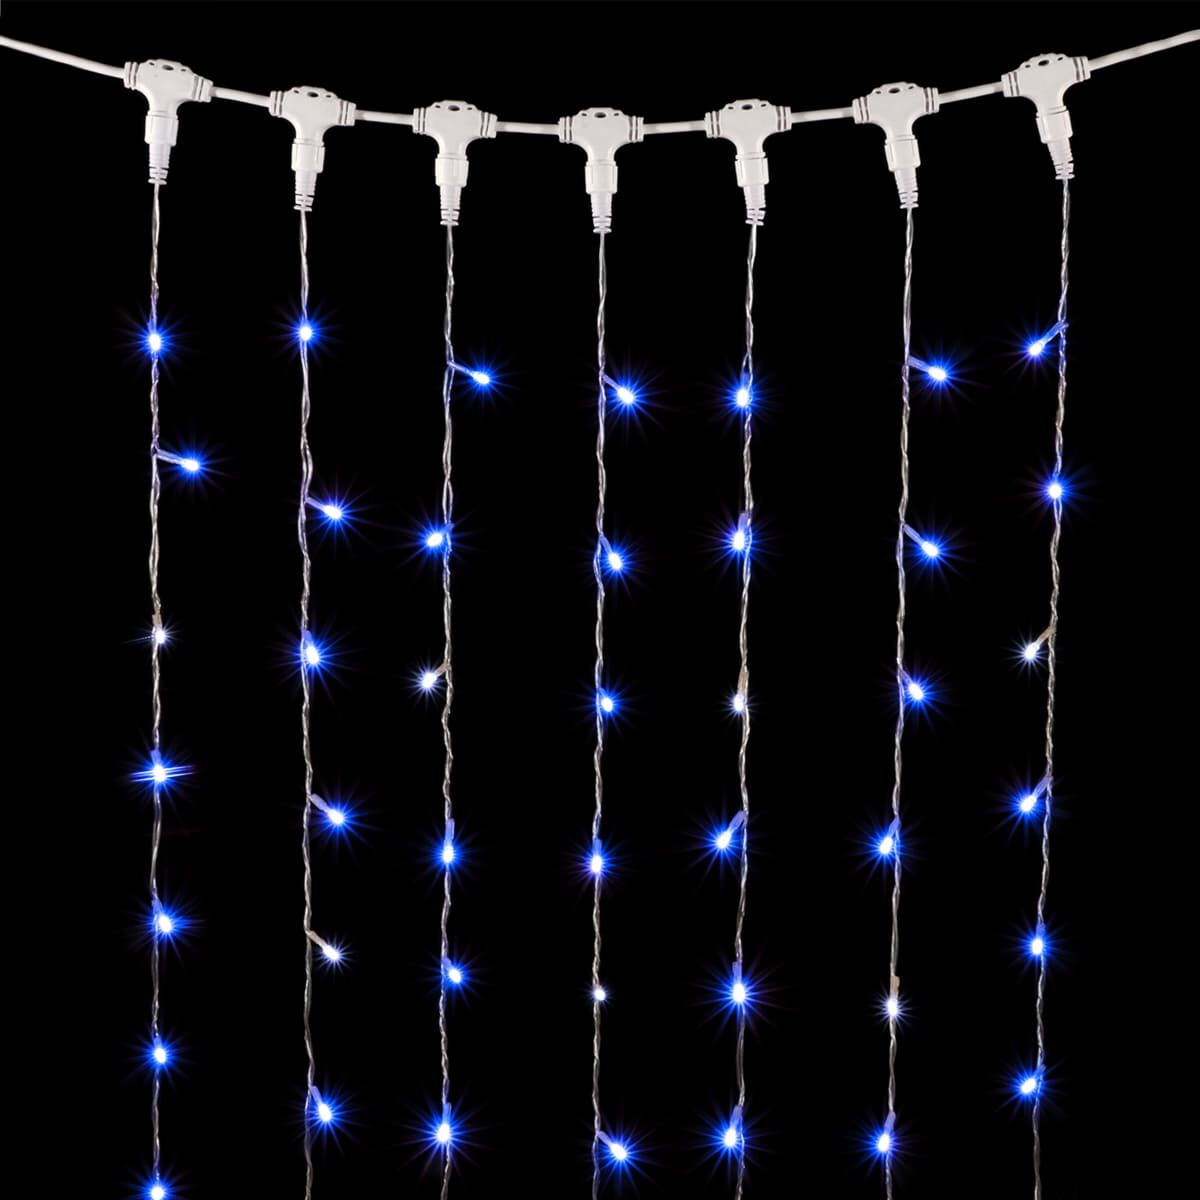 01-192 Гирлянда Занавес 2 x 3 м Синий с Мерцанием Белого Диода, 600 LED, Провод Прозрачный ПВХ, IP54